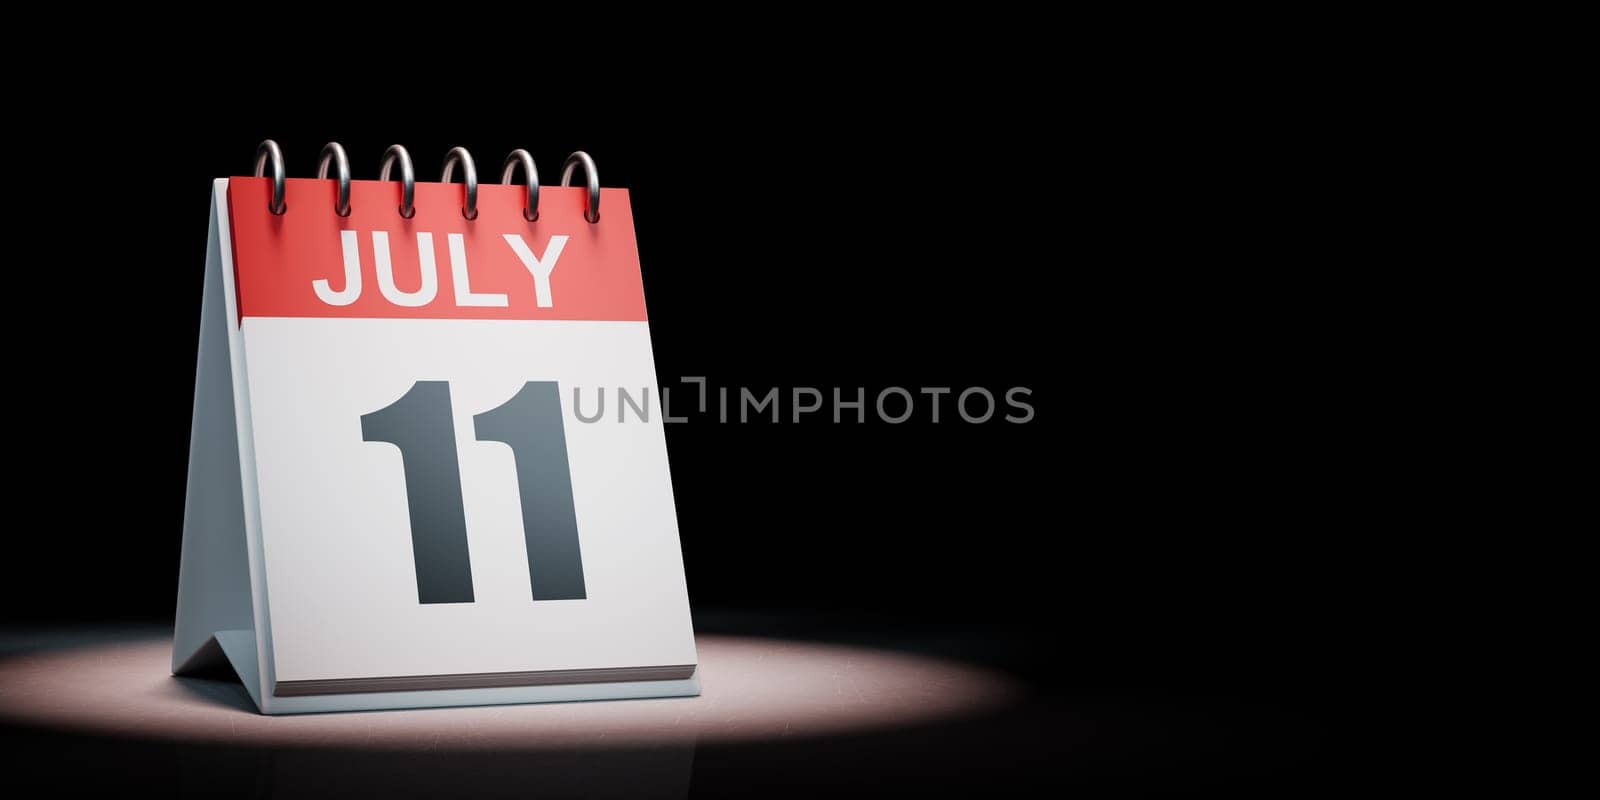 July 11 Calendar Spotlighted on Black Background by make